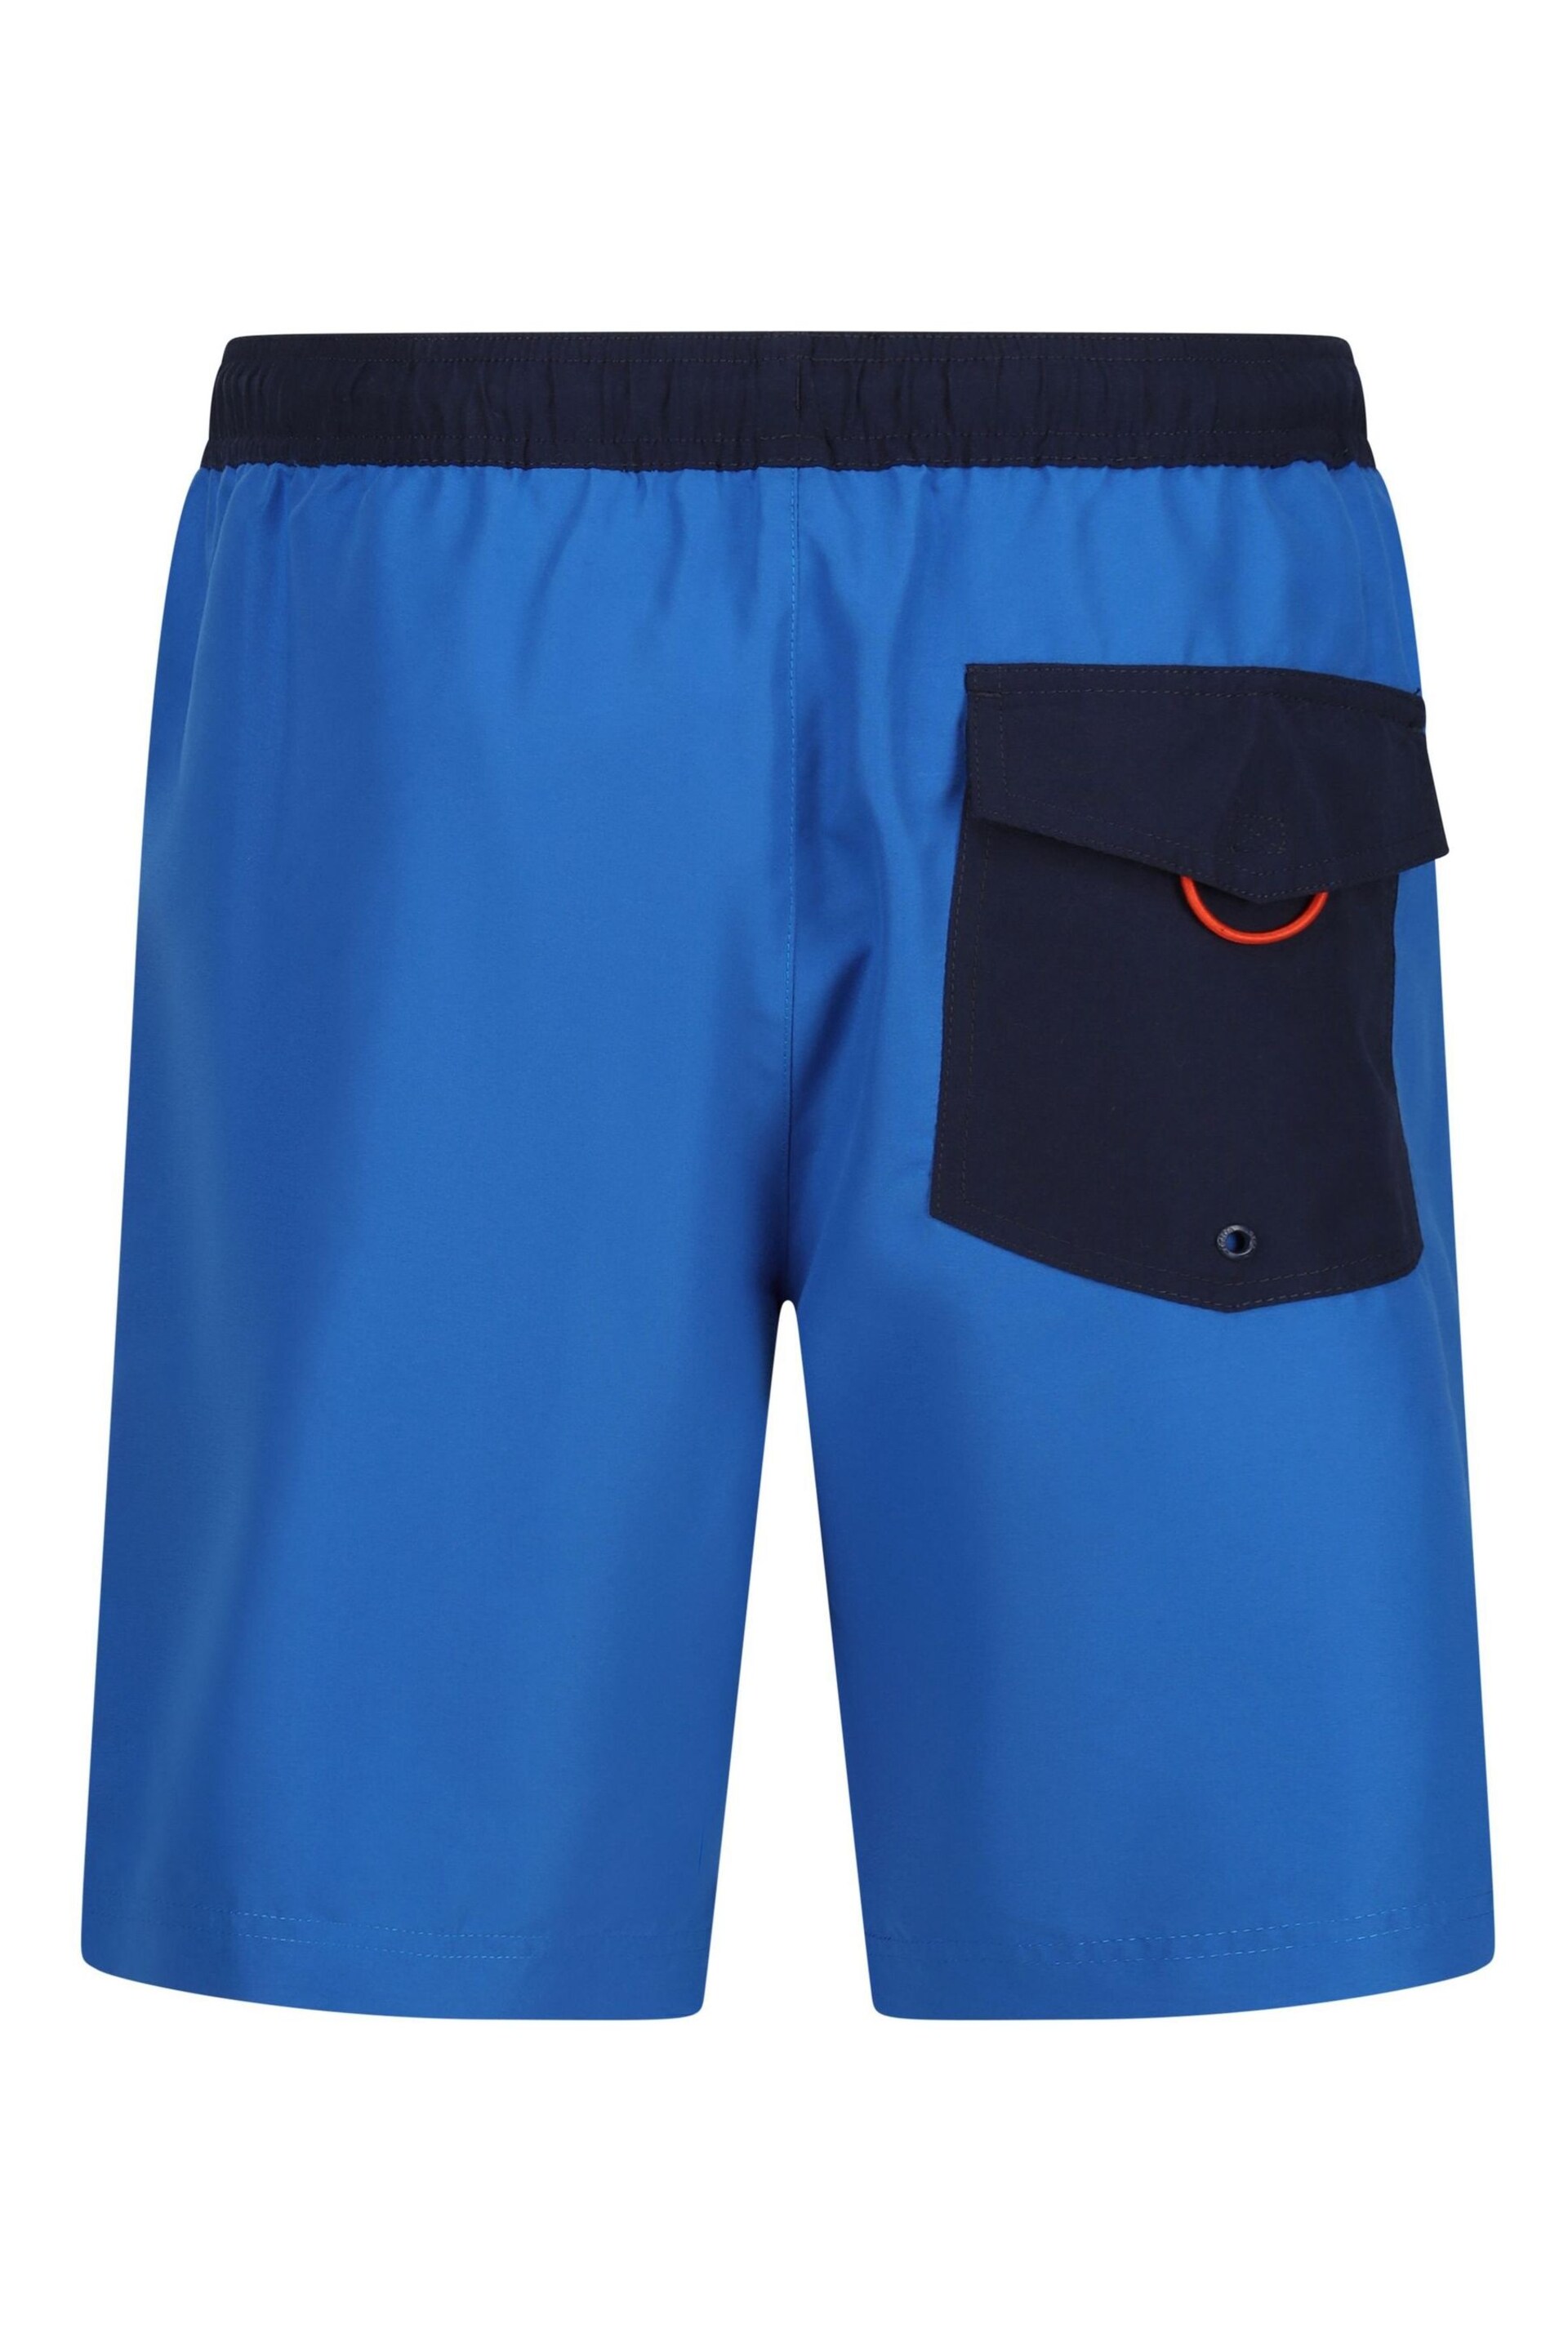 Regatta Blue Bentham Swim Shorts - Image 7 of 8